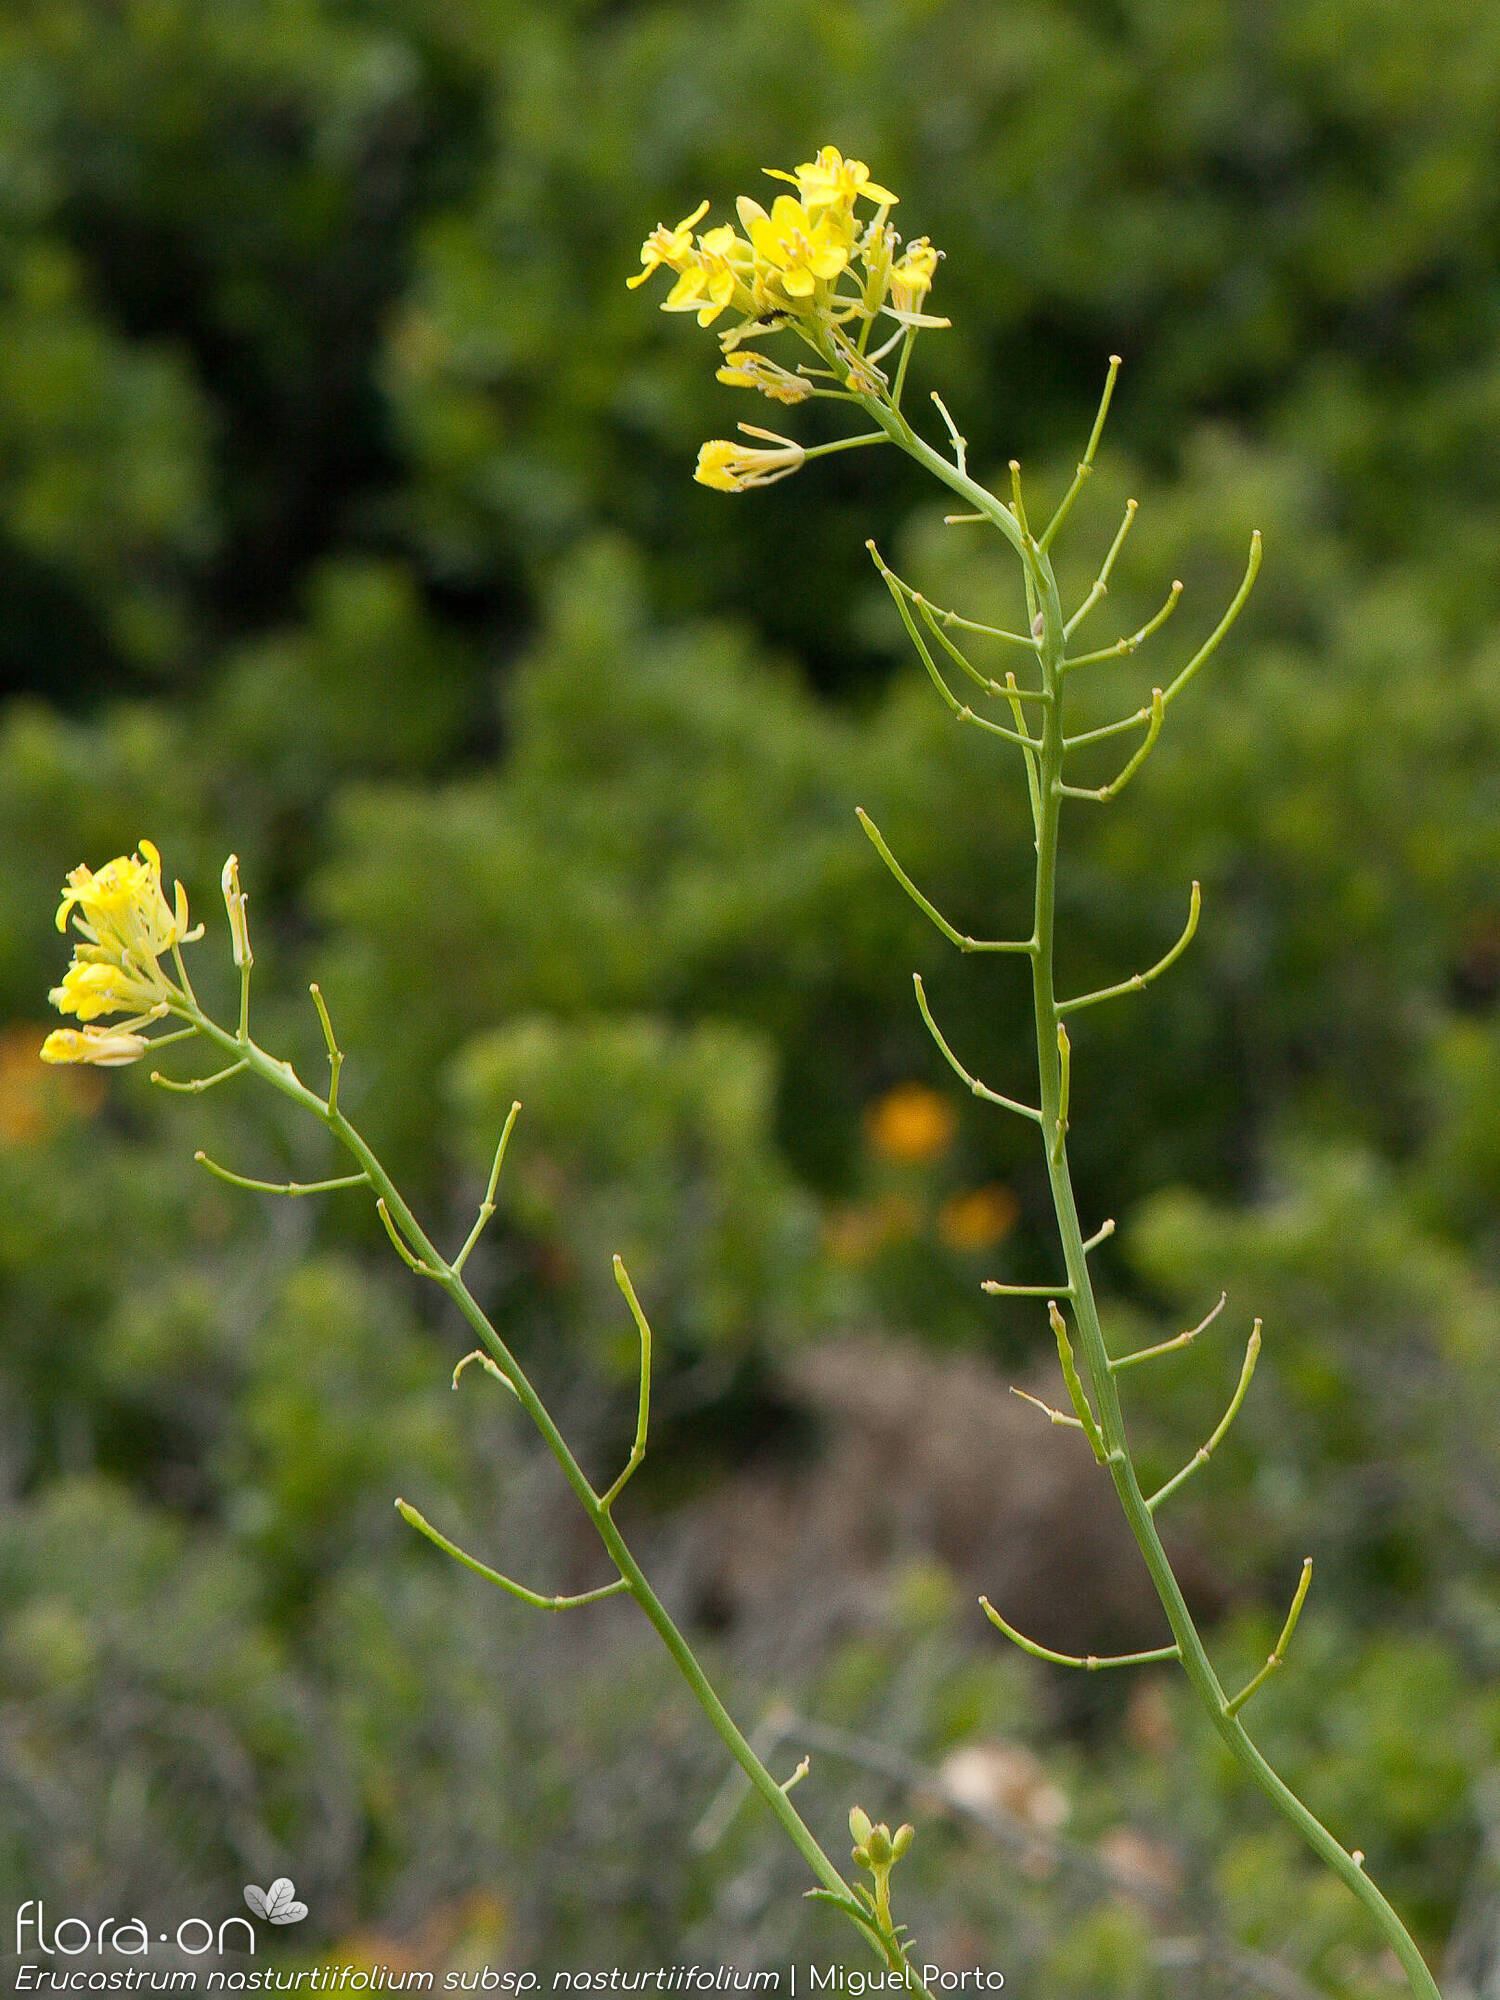 Erucastrum nasturtiifolium nasturtiifolium - Flor (geral) | Miguel Porto; CC BY-NC 4.0